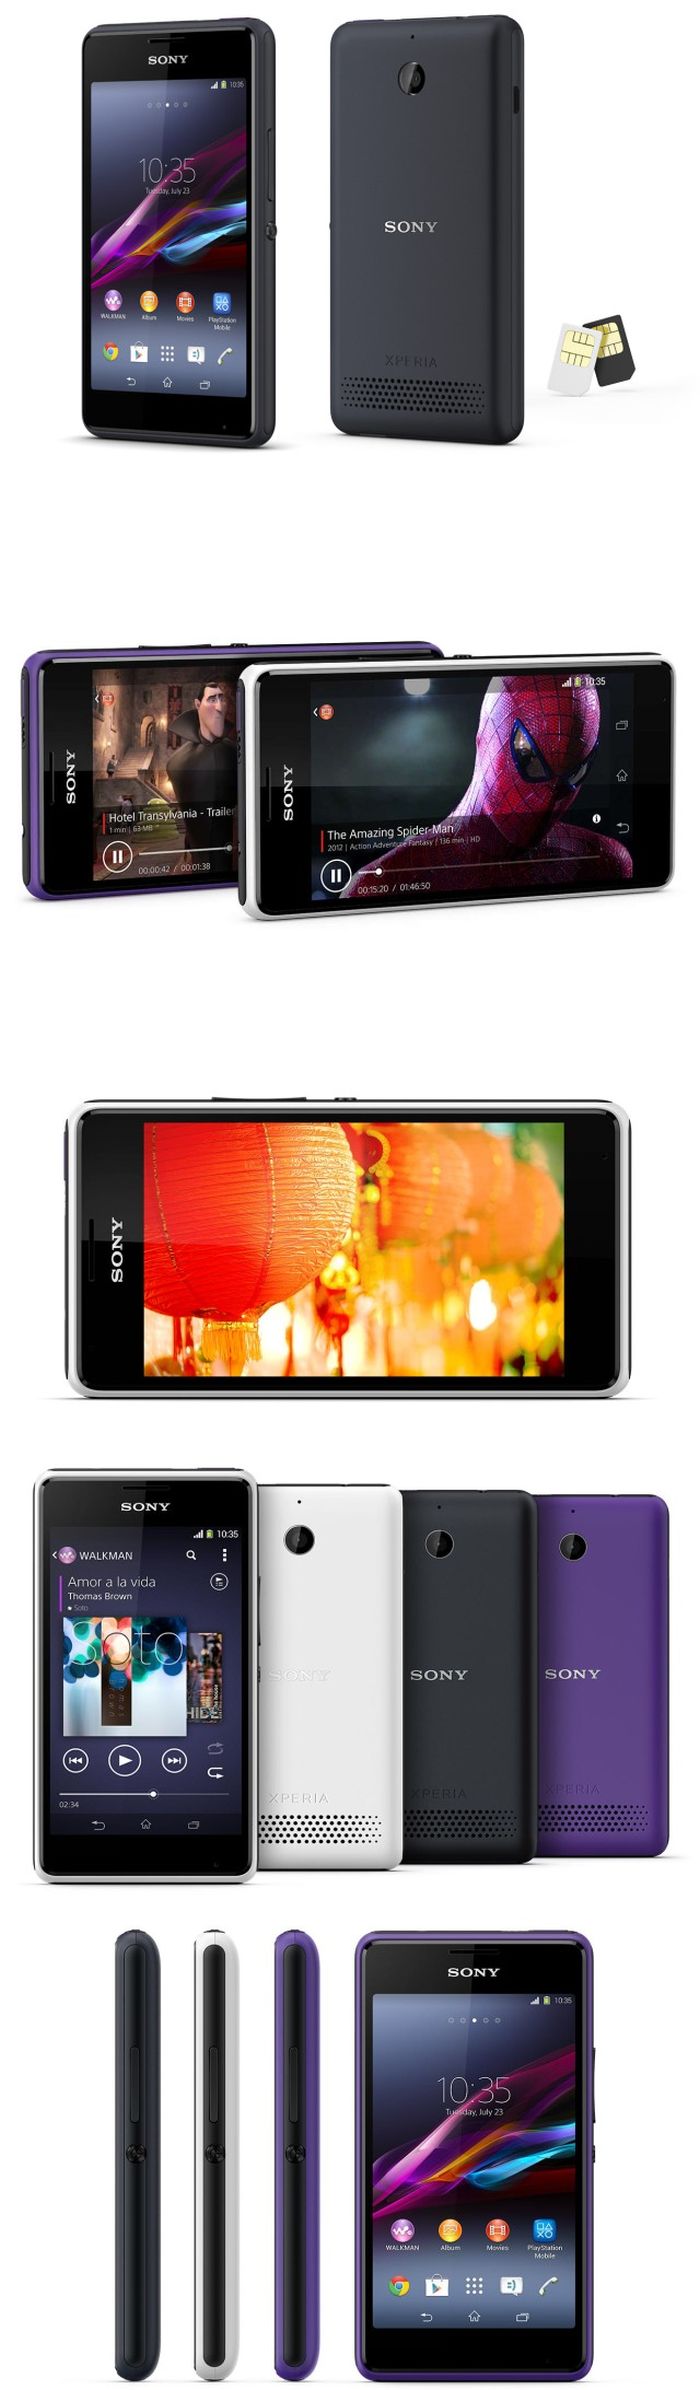 Sony Xperia E1 és E1 dual SIM